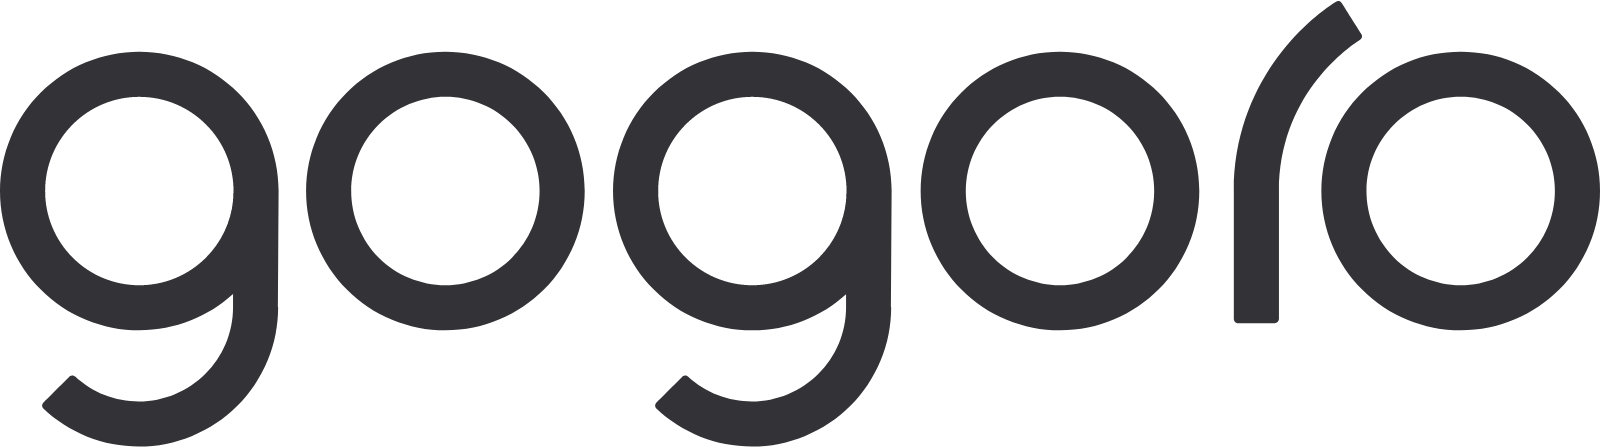 Gogoro logo large (transparent PNG)